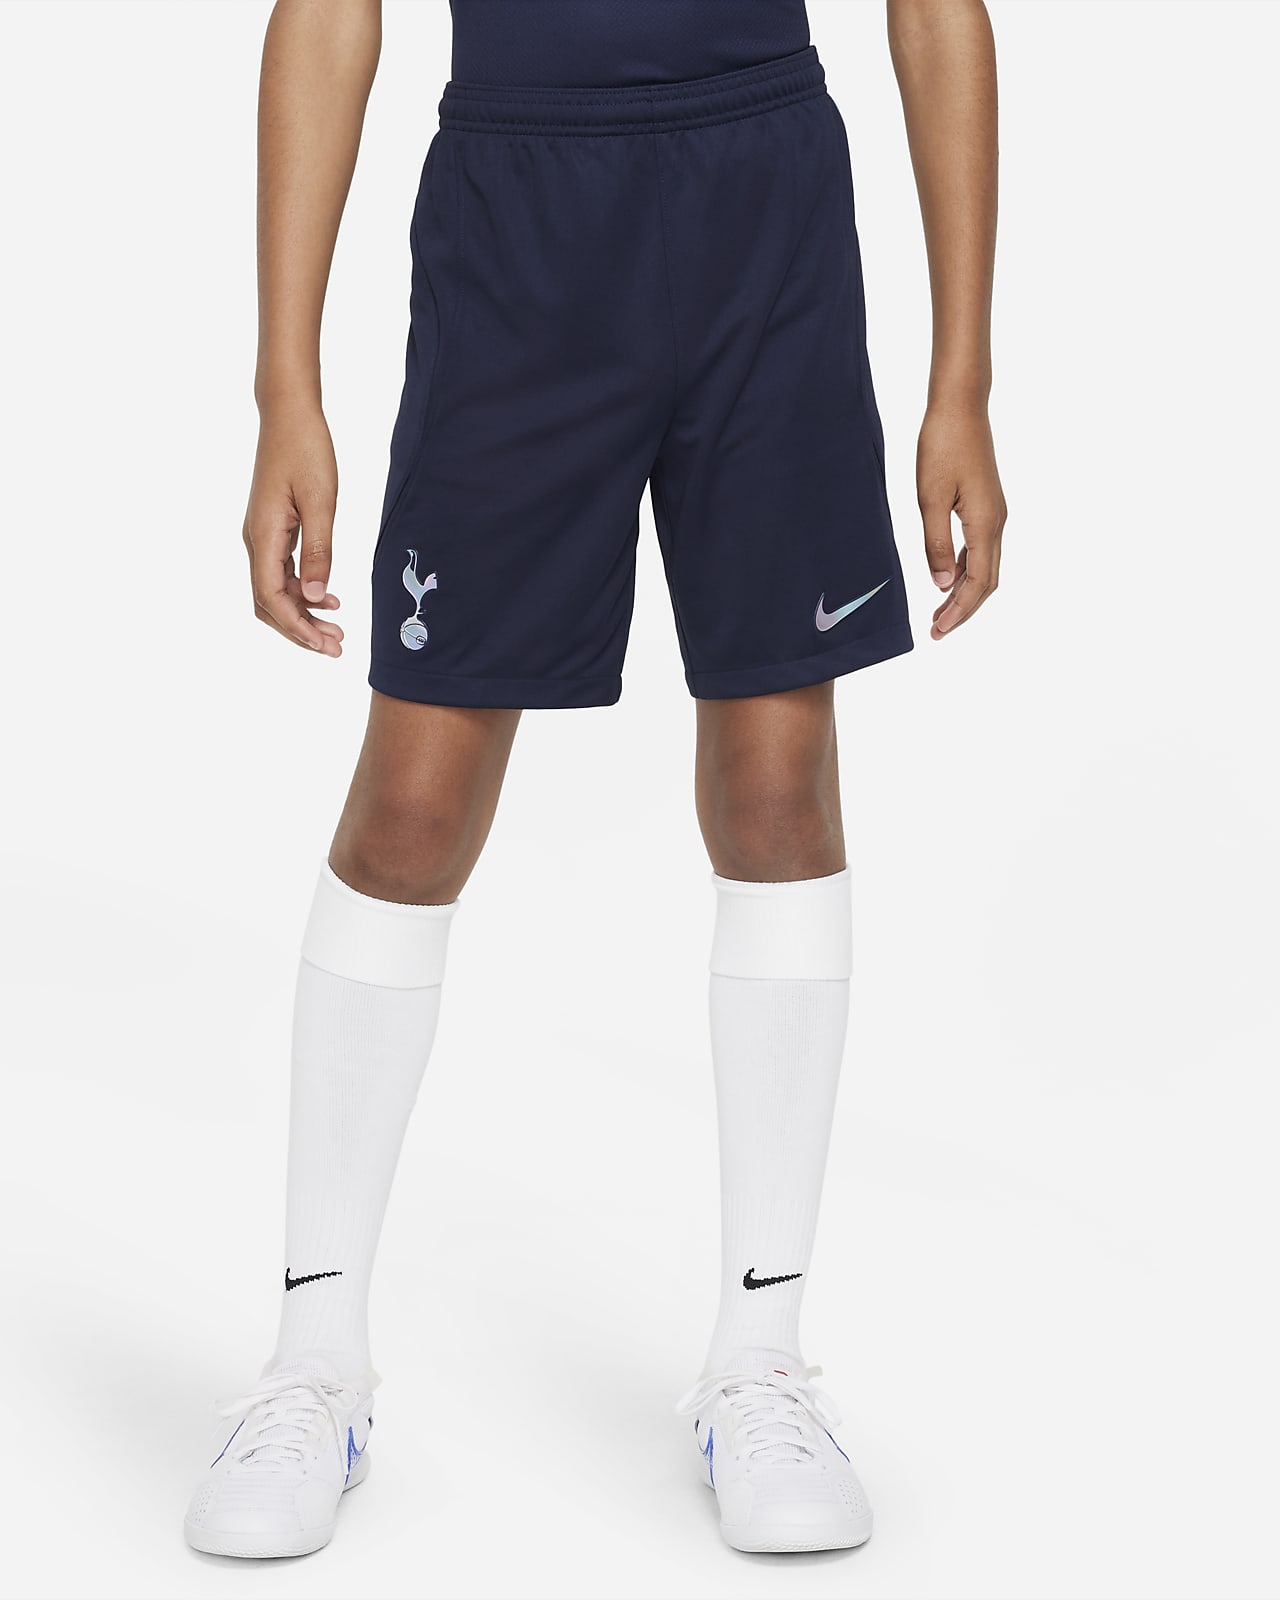 Nike Tottenham Hotspur Shirt Home 2020/2021 Kids - White